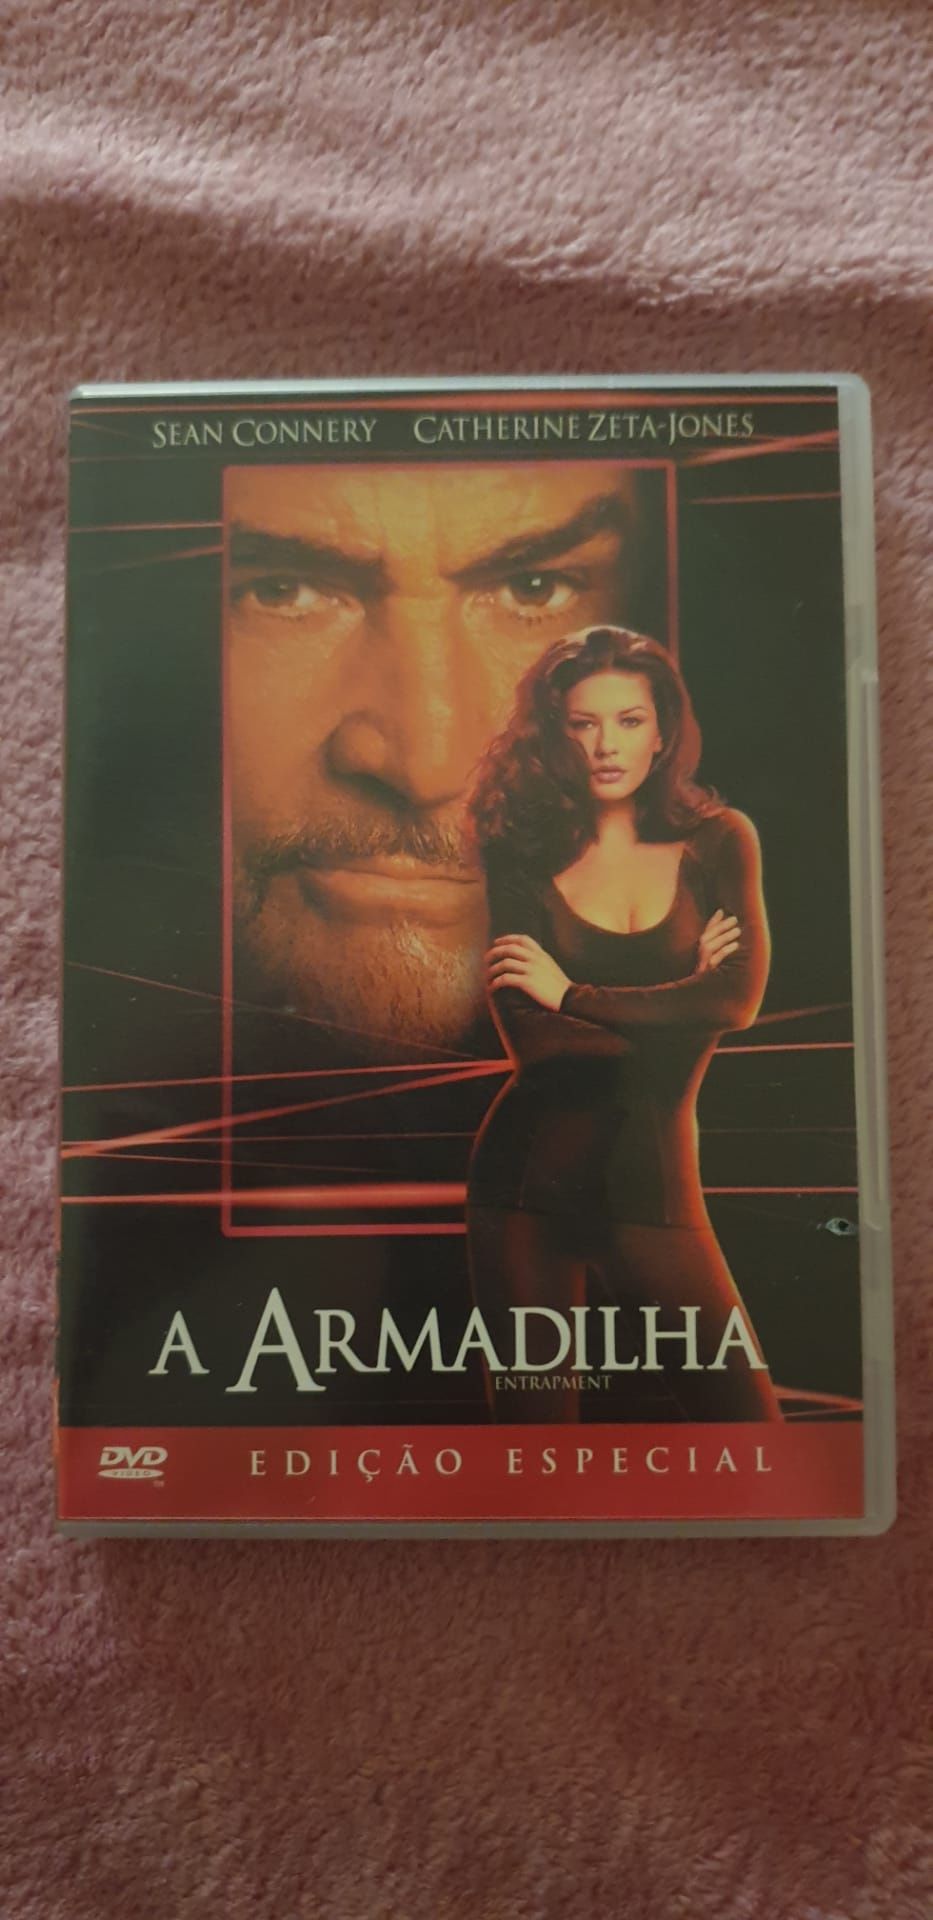 DVD A Armadilha.